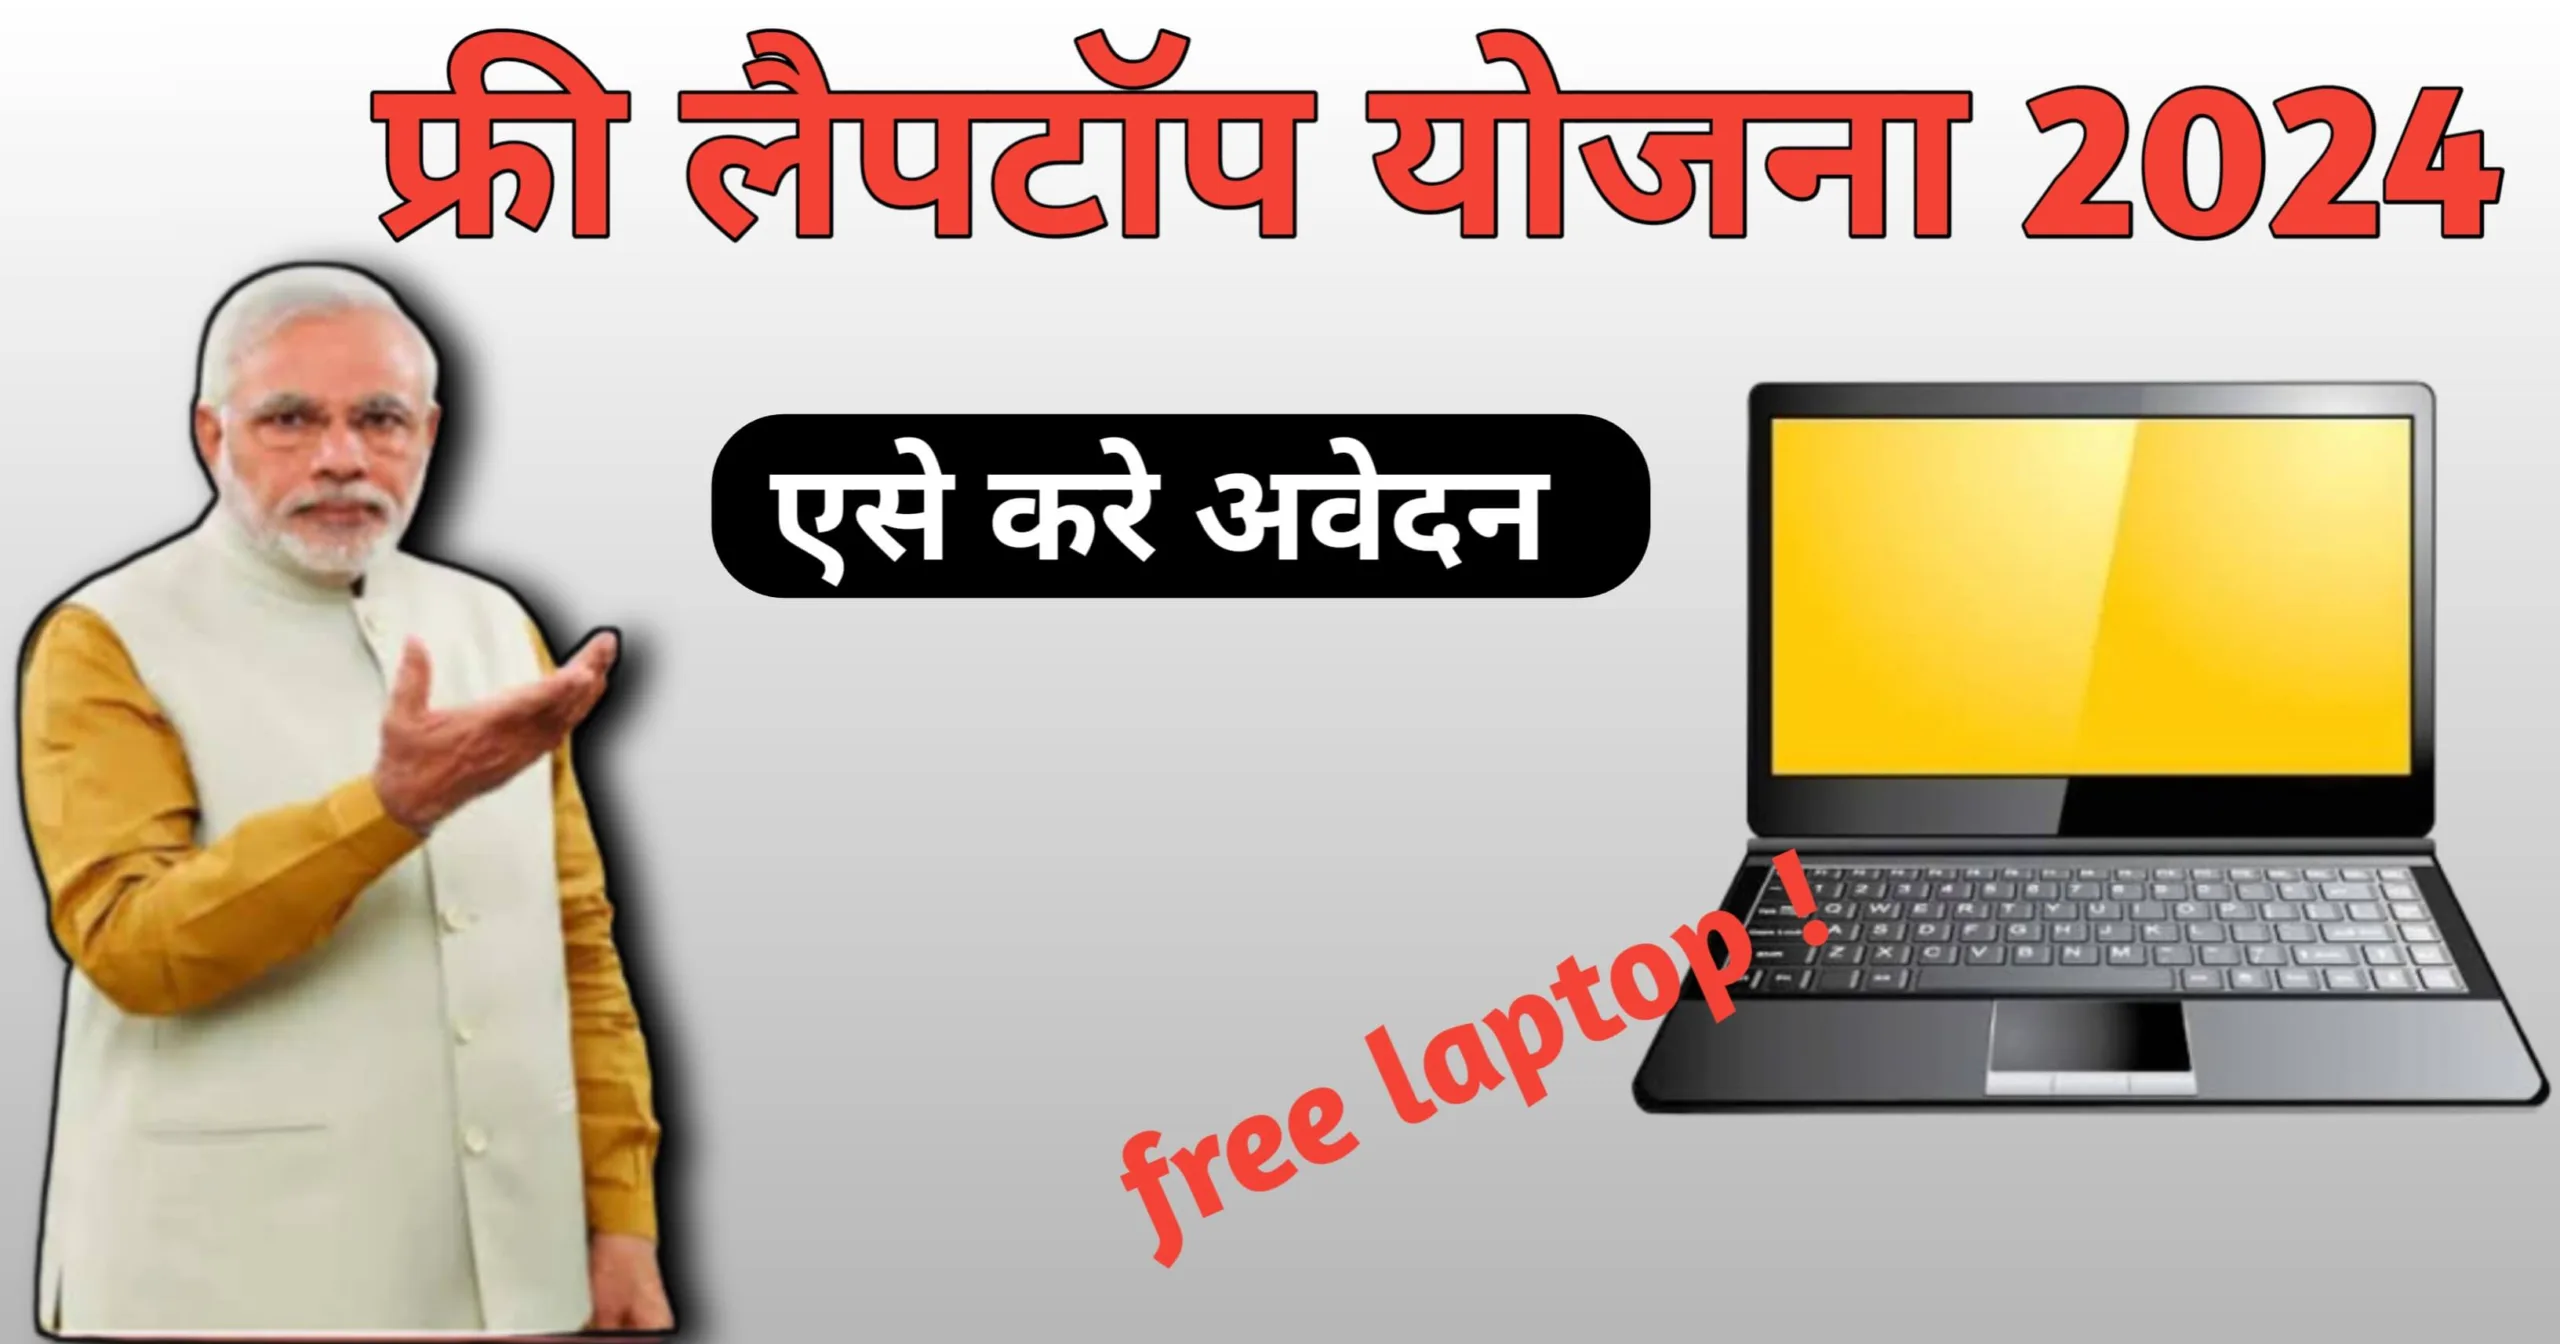 AICTE Free Laptop Yojana 2024 apply online